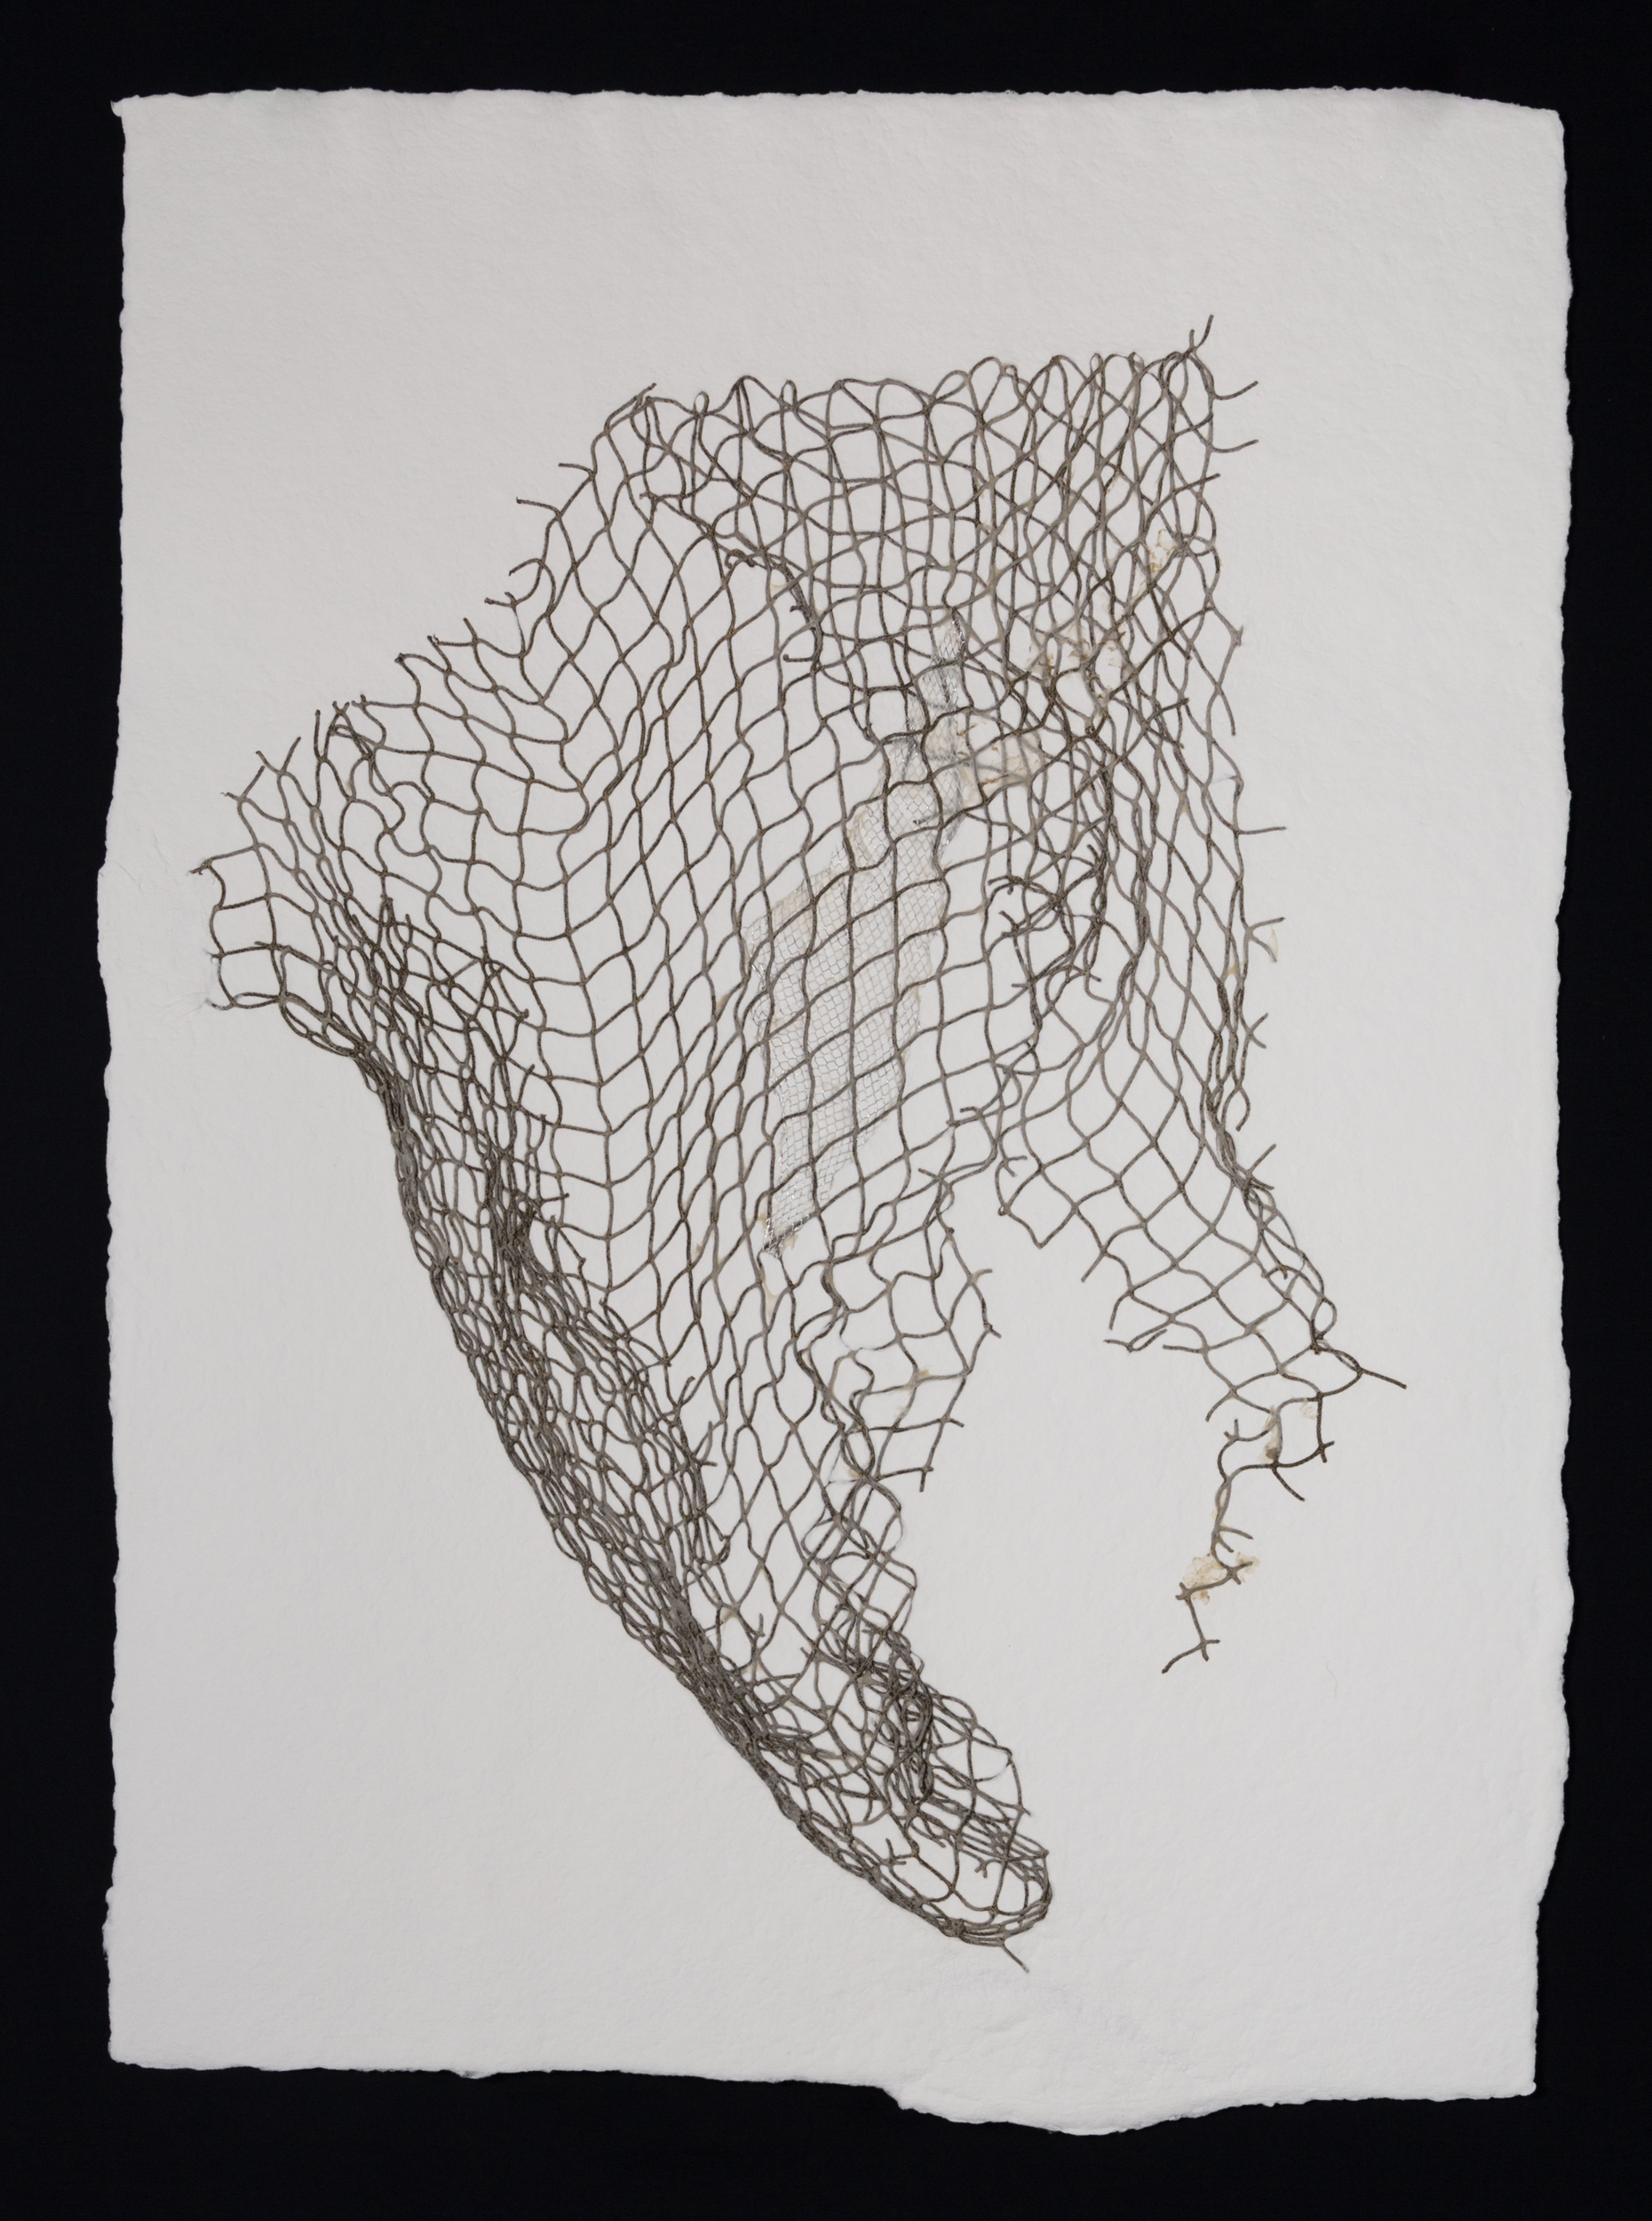   Net III , 2017, cotton paper and nylon net, 30" x 22" 